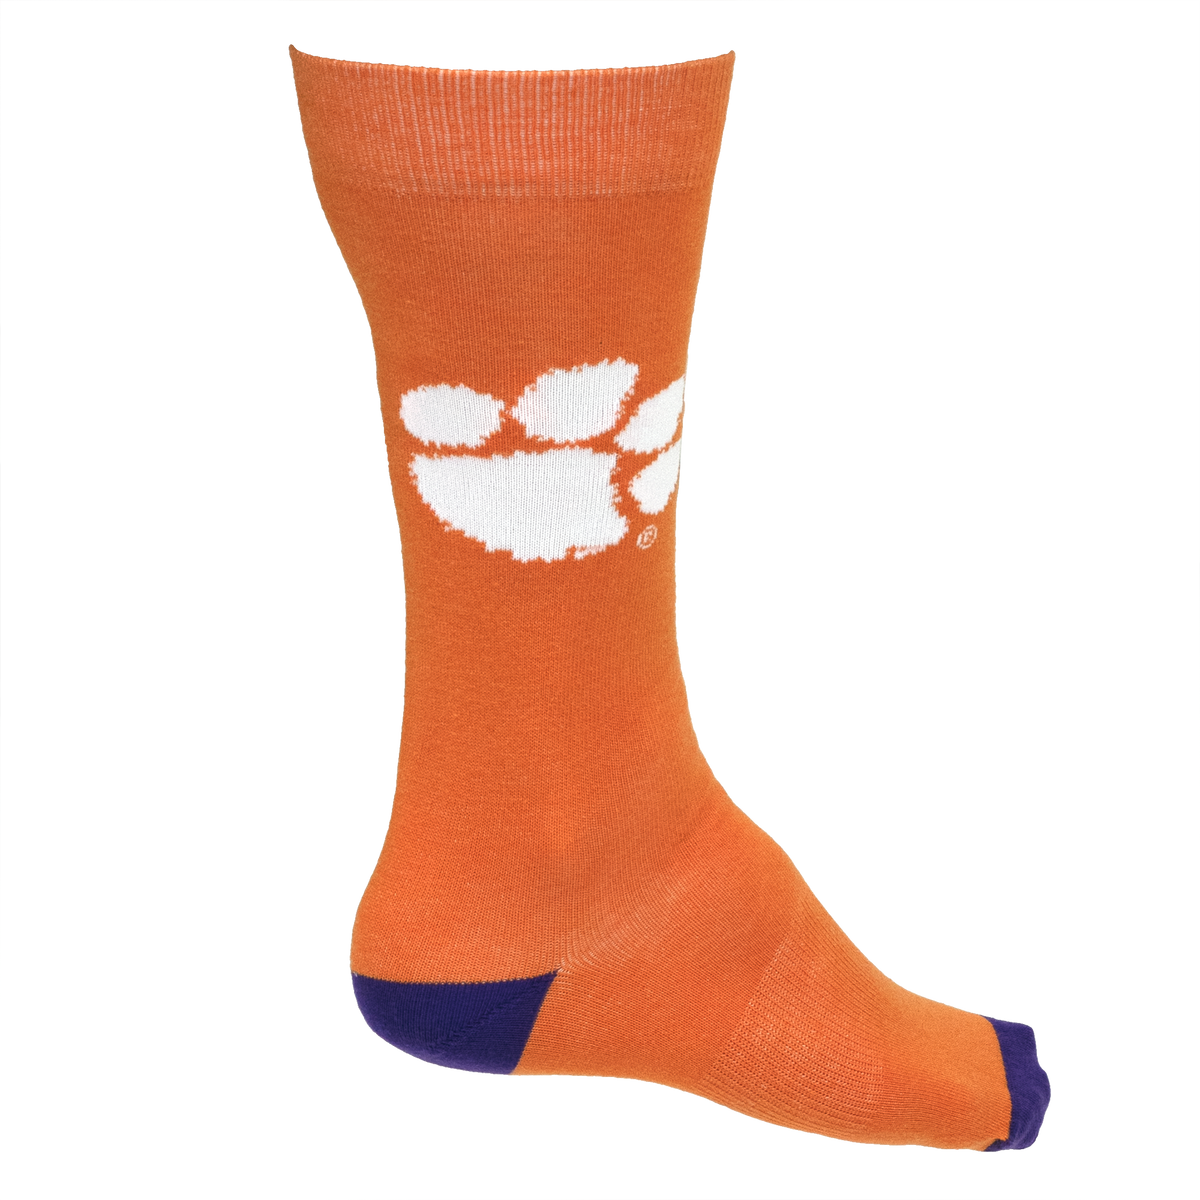 Clemson Orange Socks with White Paw